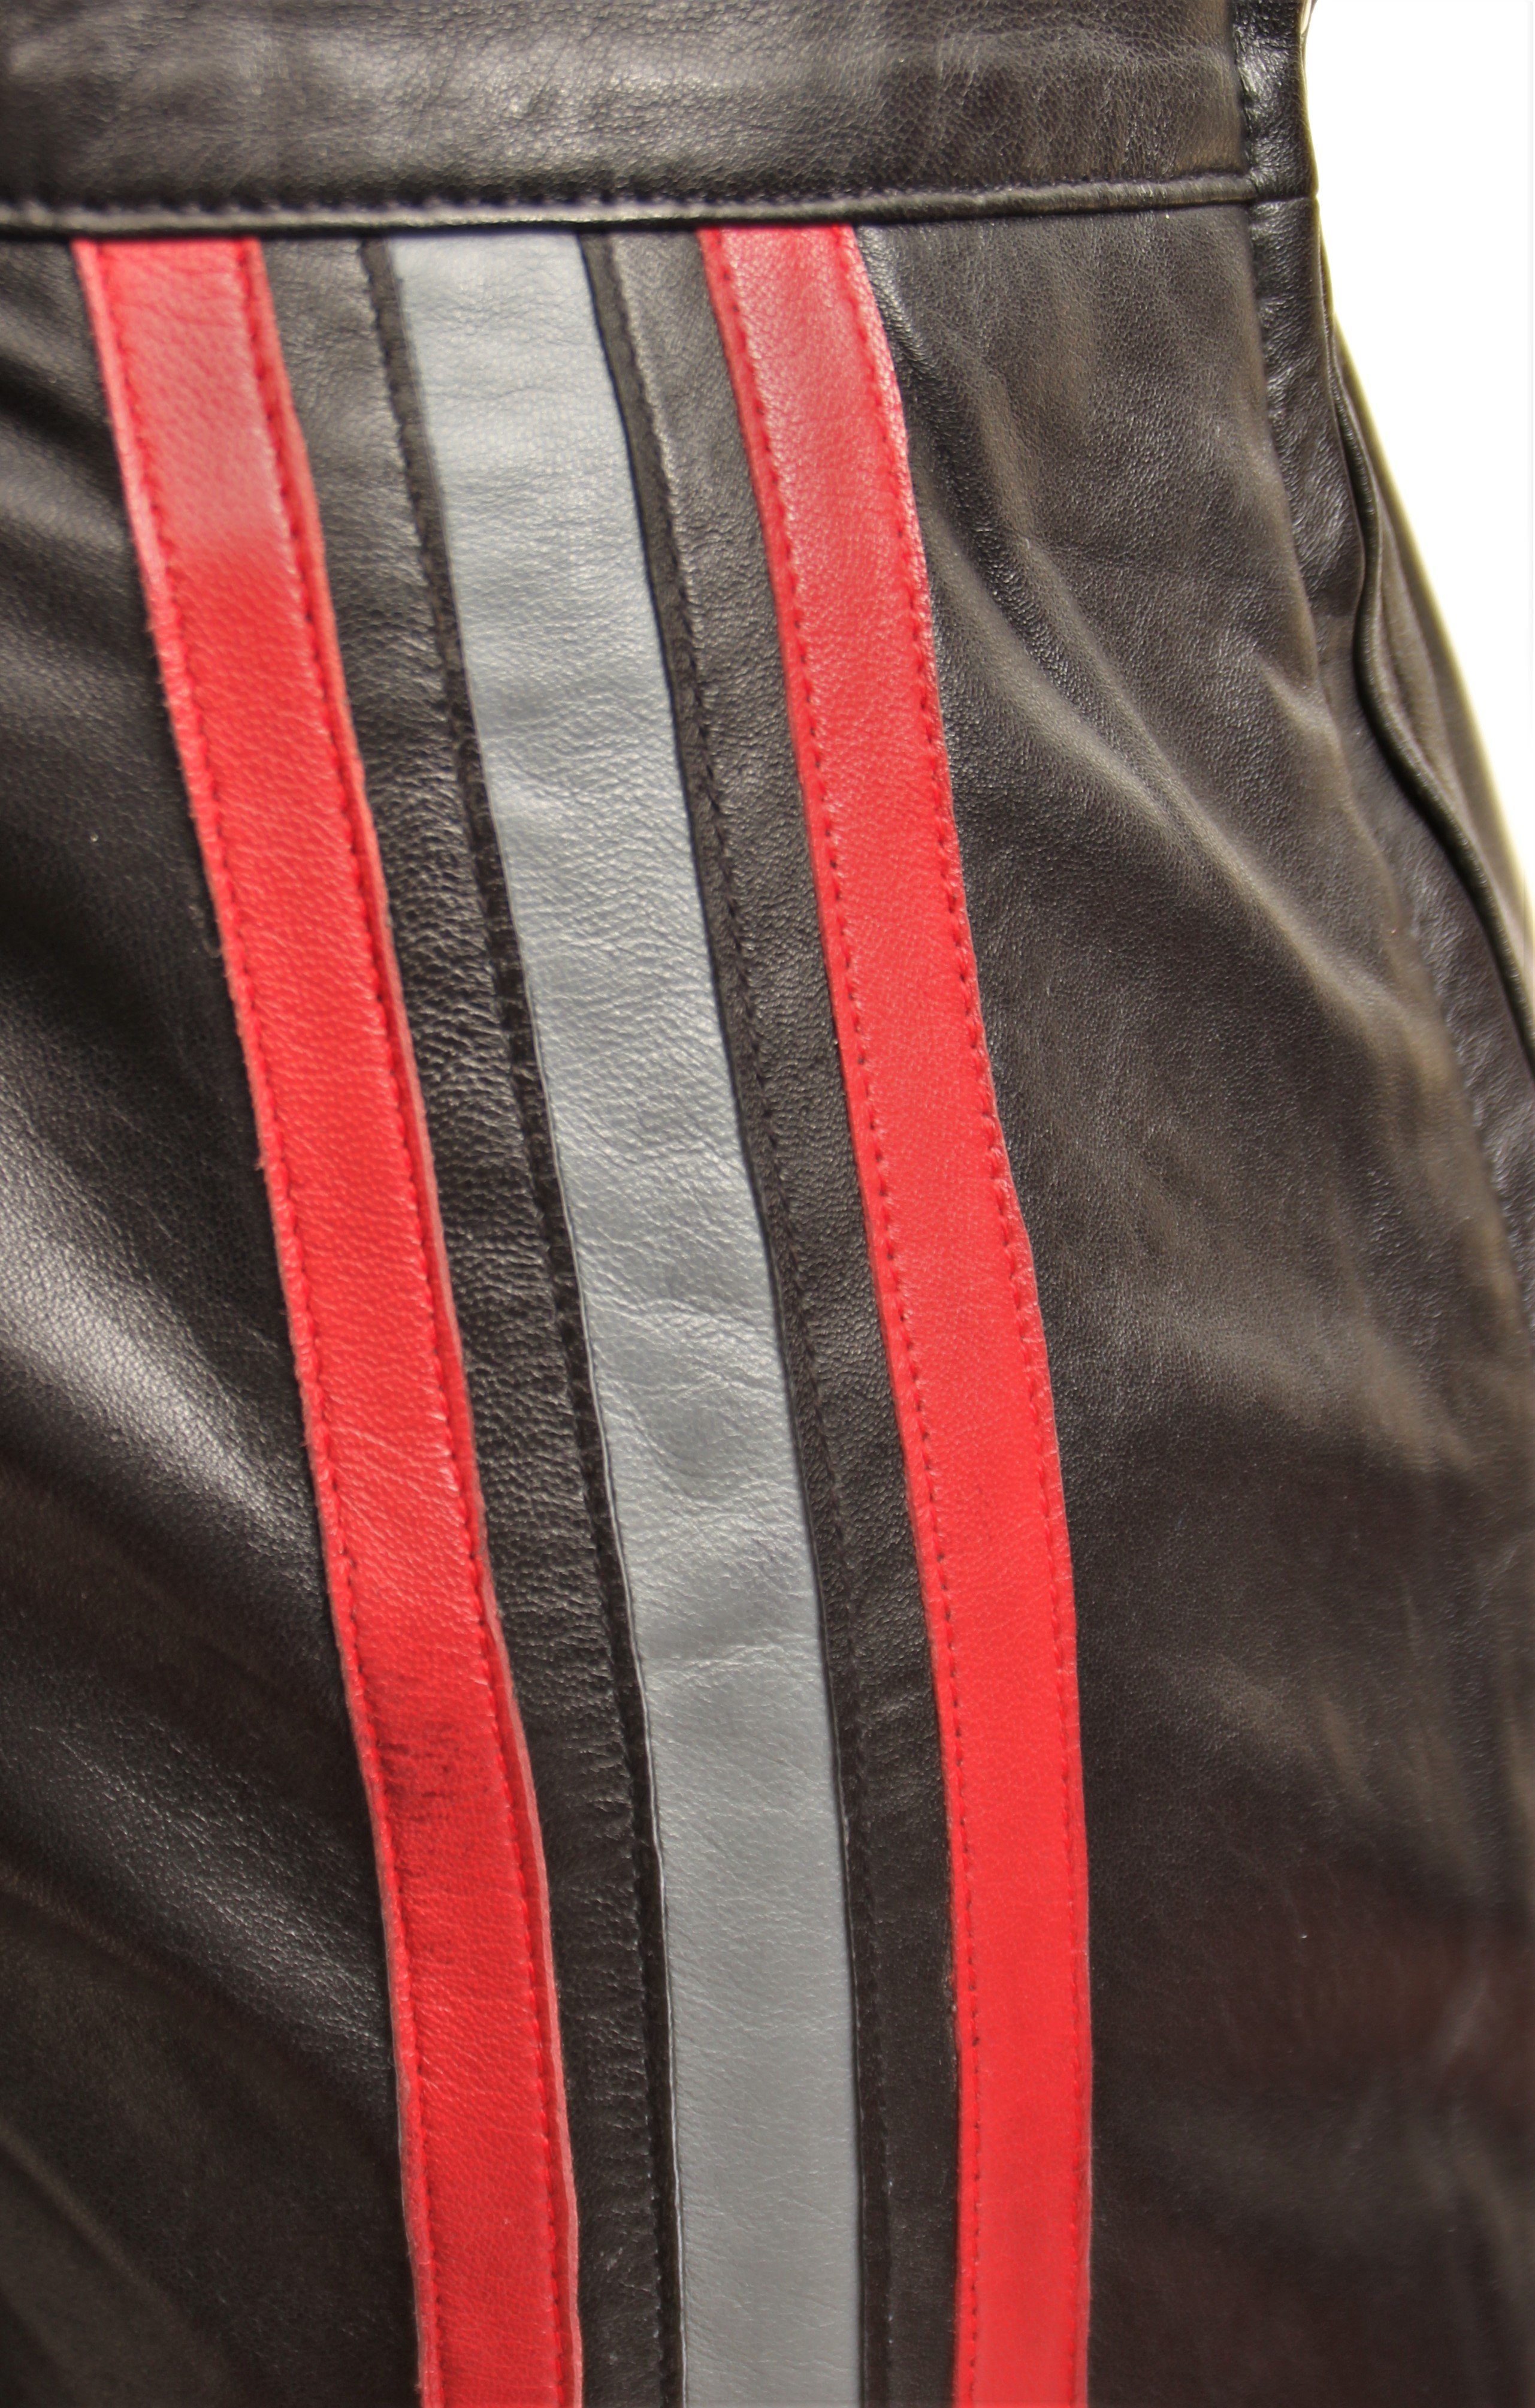 Be Noble Lederhose Lederhose Leicht Streifen Aspen grauen rot ausgestellte mit